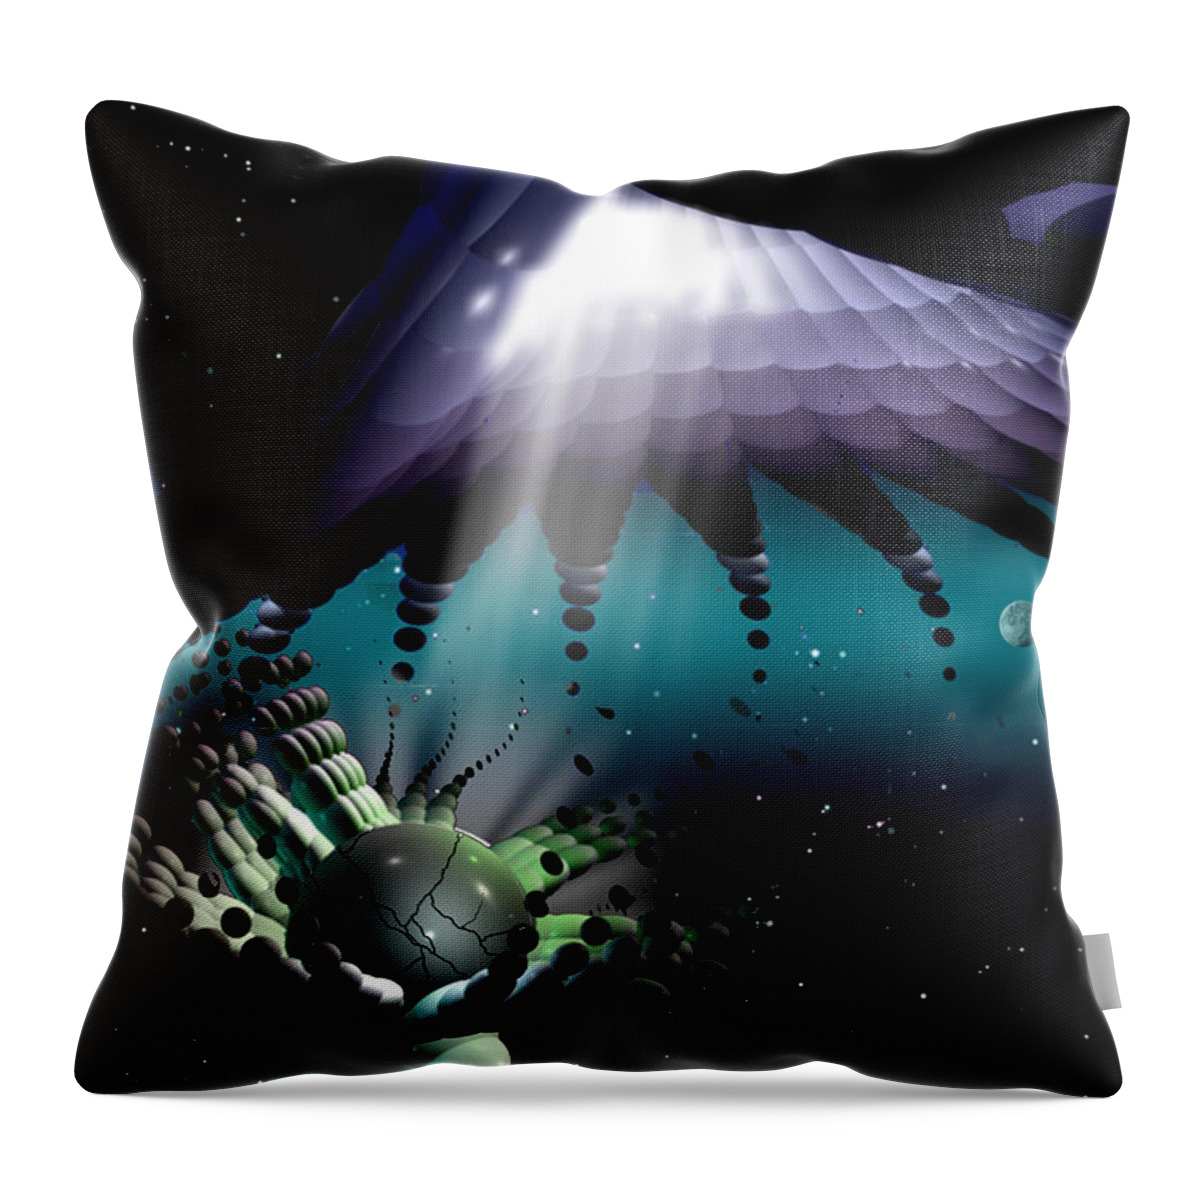 Phil Sadler Throw Pillow featuring the digital art Shine by Phil Sadler